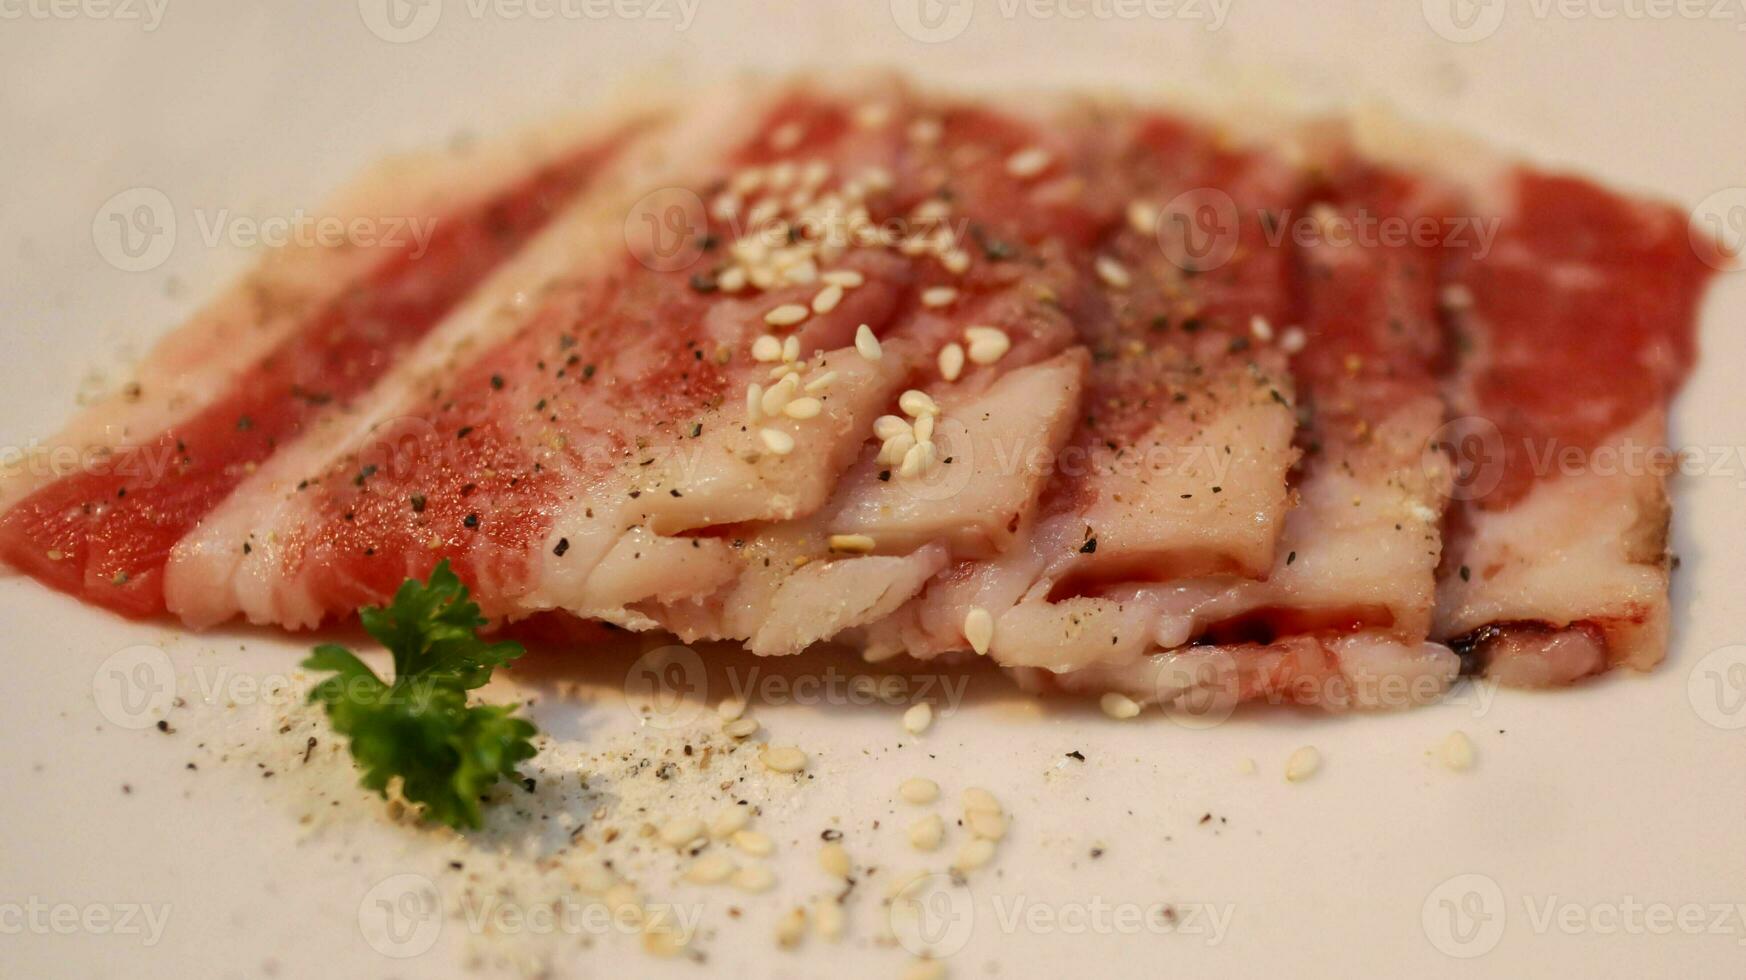 plak van vers rundvlees of varkensvlees vlees Cadeau in een wit bord voor grill, barbecue, en heet pot. Japans wagyu yakiniku rundvlees plak. foto